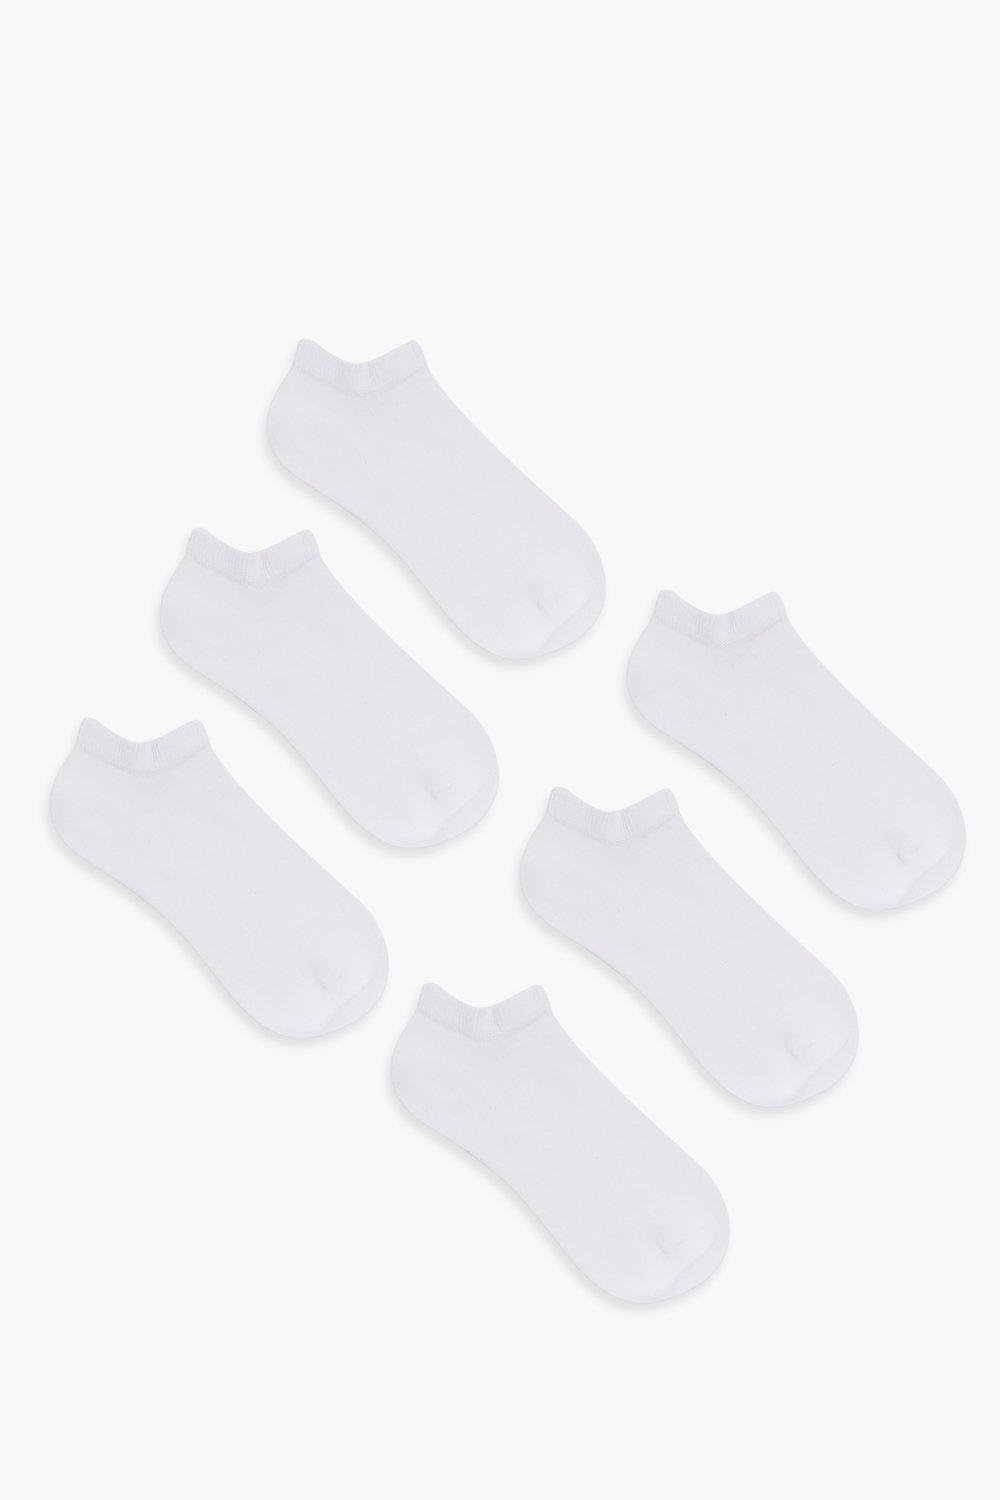 Womens 6 Pack Trainer Socks - White - One Size, White